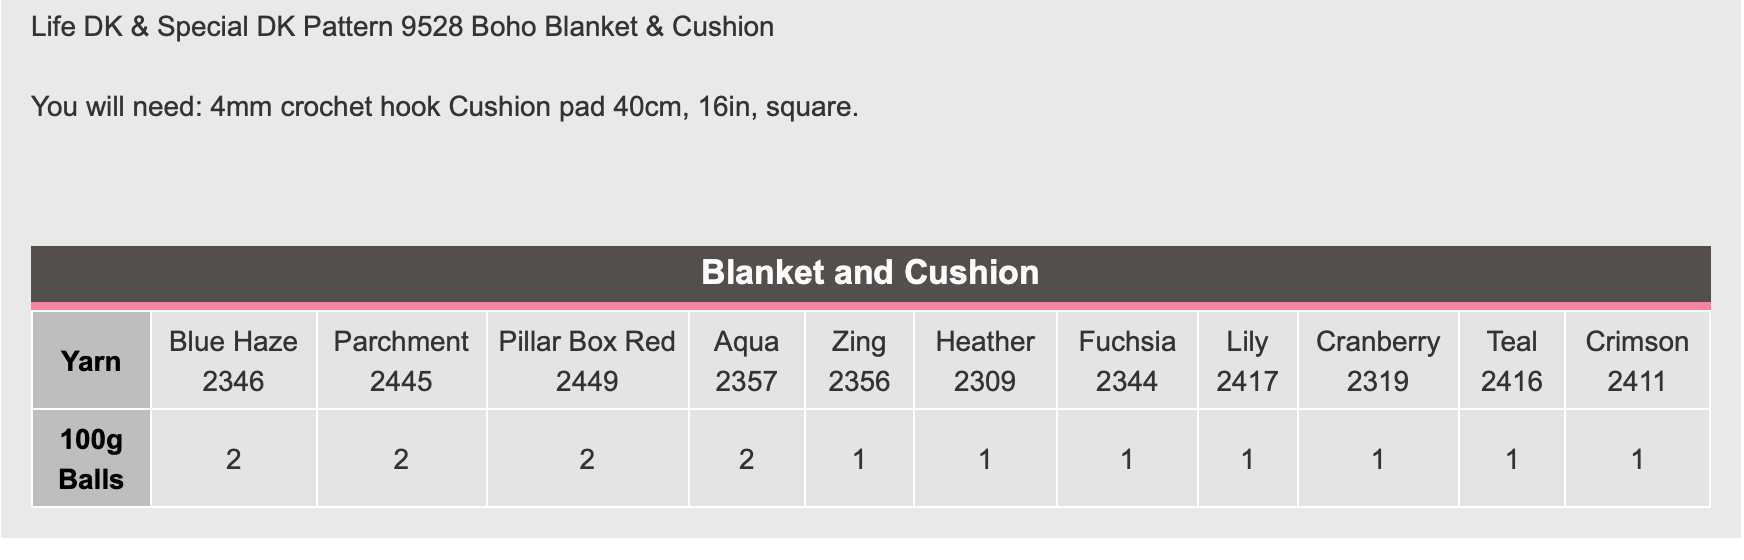 Stylecraft 9528 Crochet Boho Blanket & Cushion in Life DK & Special DK